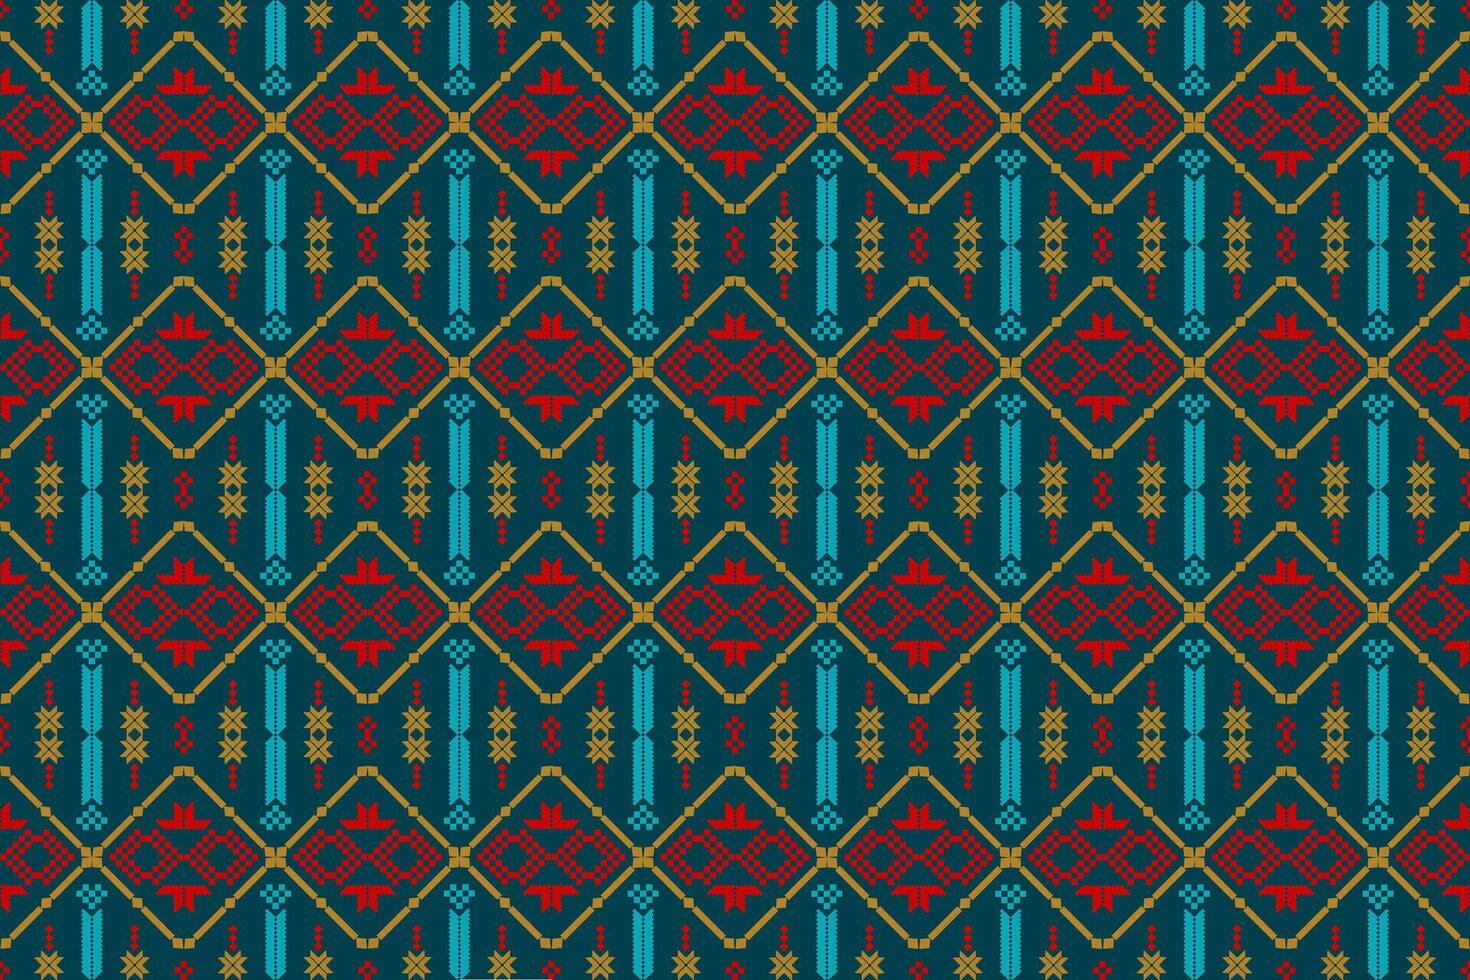 etnisk ikat tyg mönster geometrisk stil.afrikansk ikat broderi etnisk orientalisk mönster brun grädde bakgrund. abstrakt, vektor, illustration.background med aztec stam- prydnad. vektor